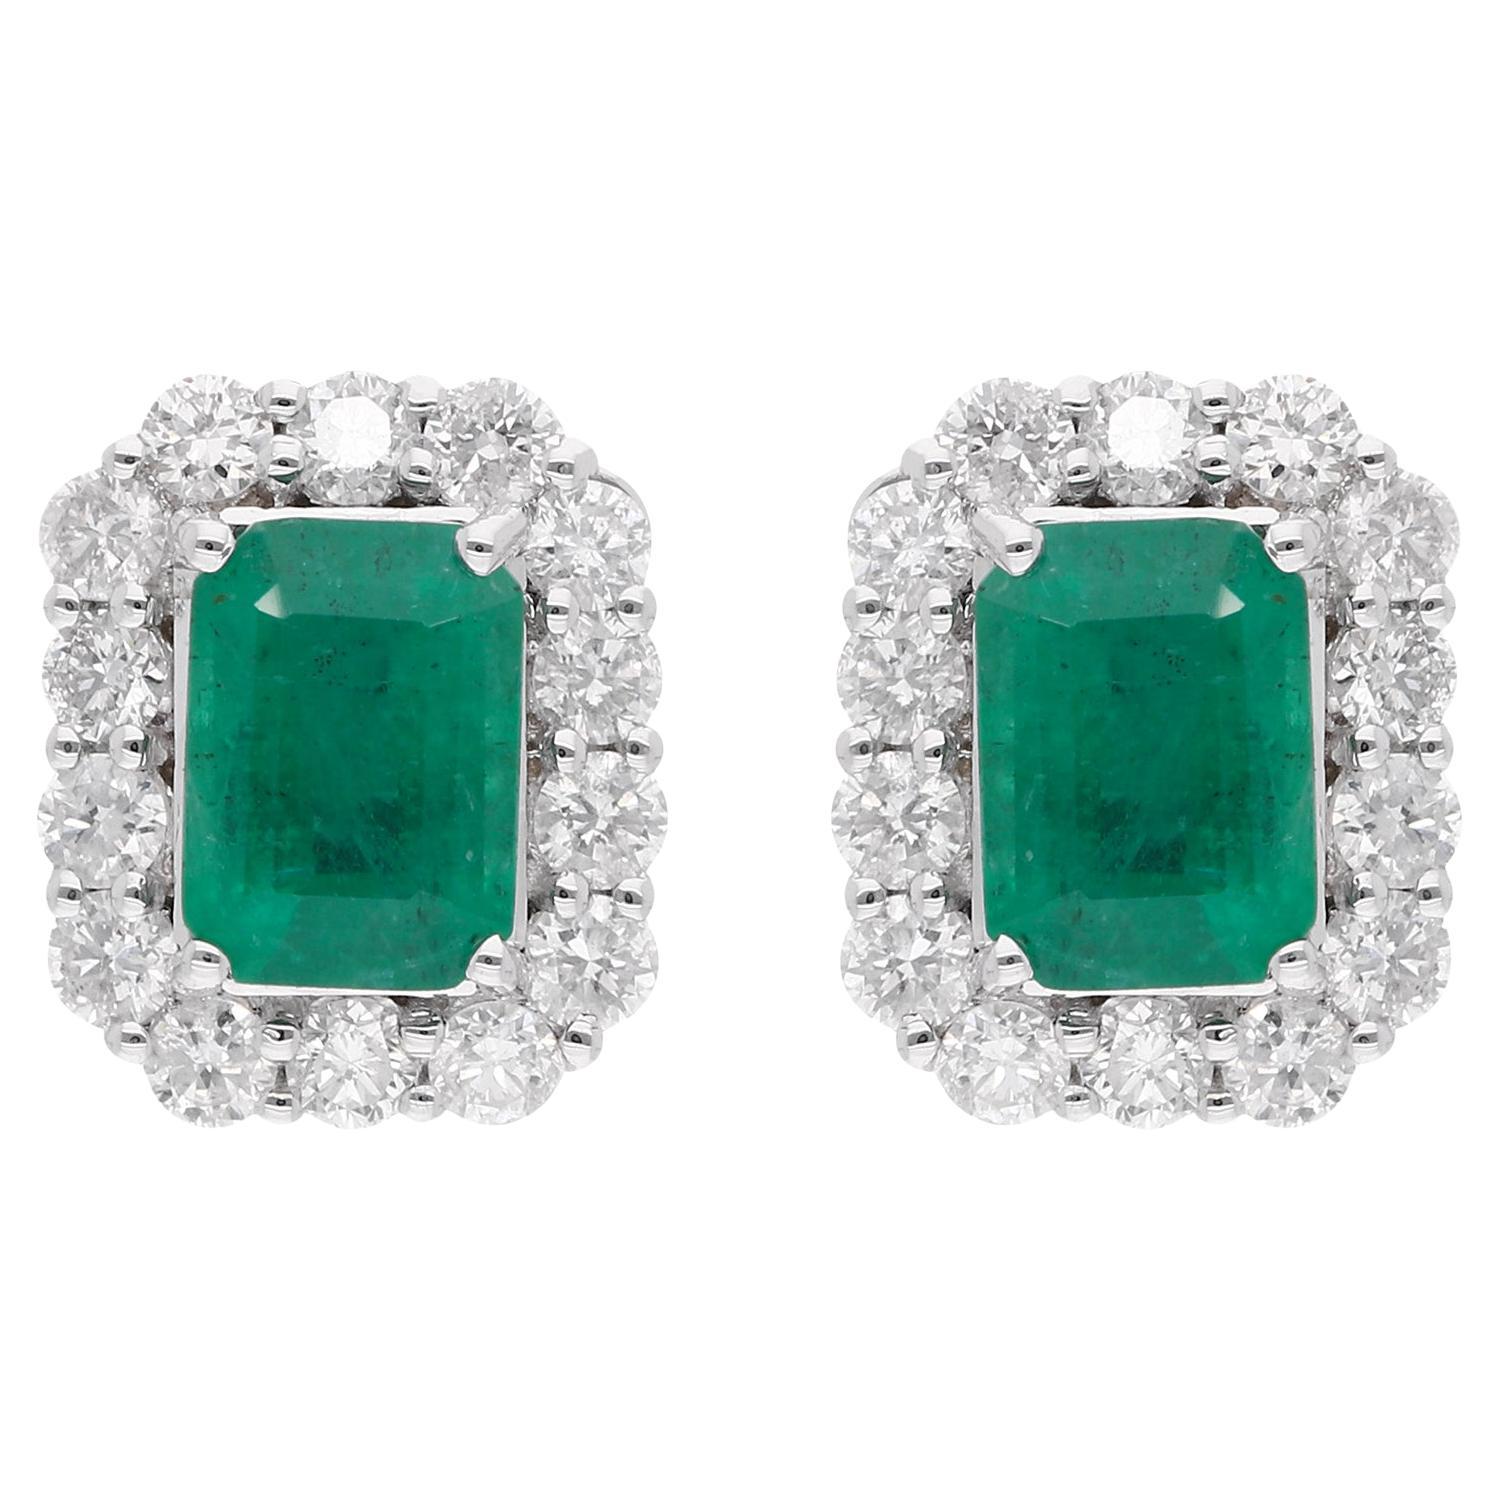 Zambian Emerald Gemstone Stud Earrings Diamond Pave 14 Karat White Gold Jewelry For Sale